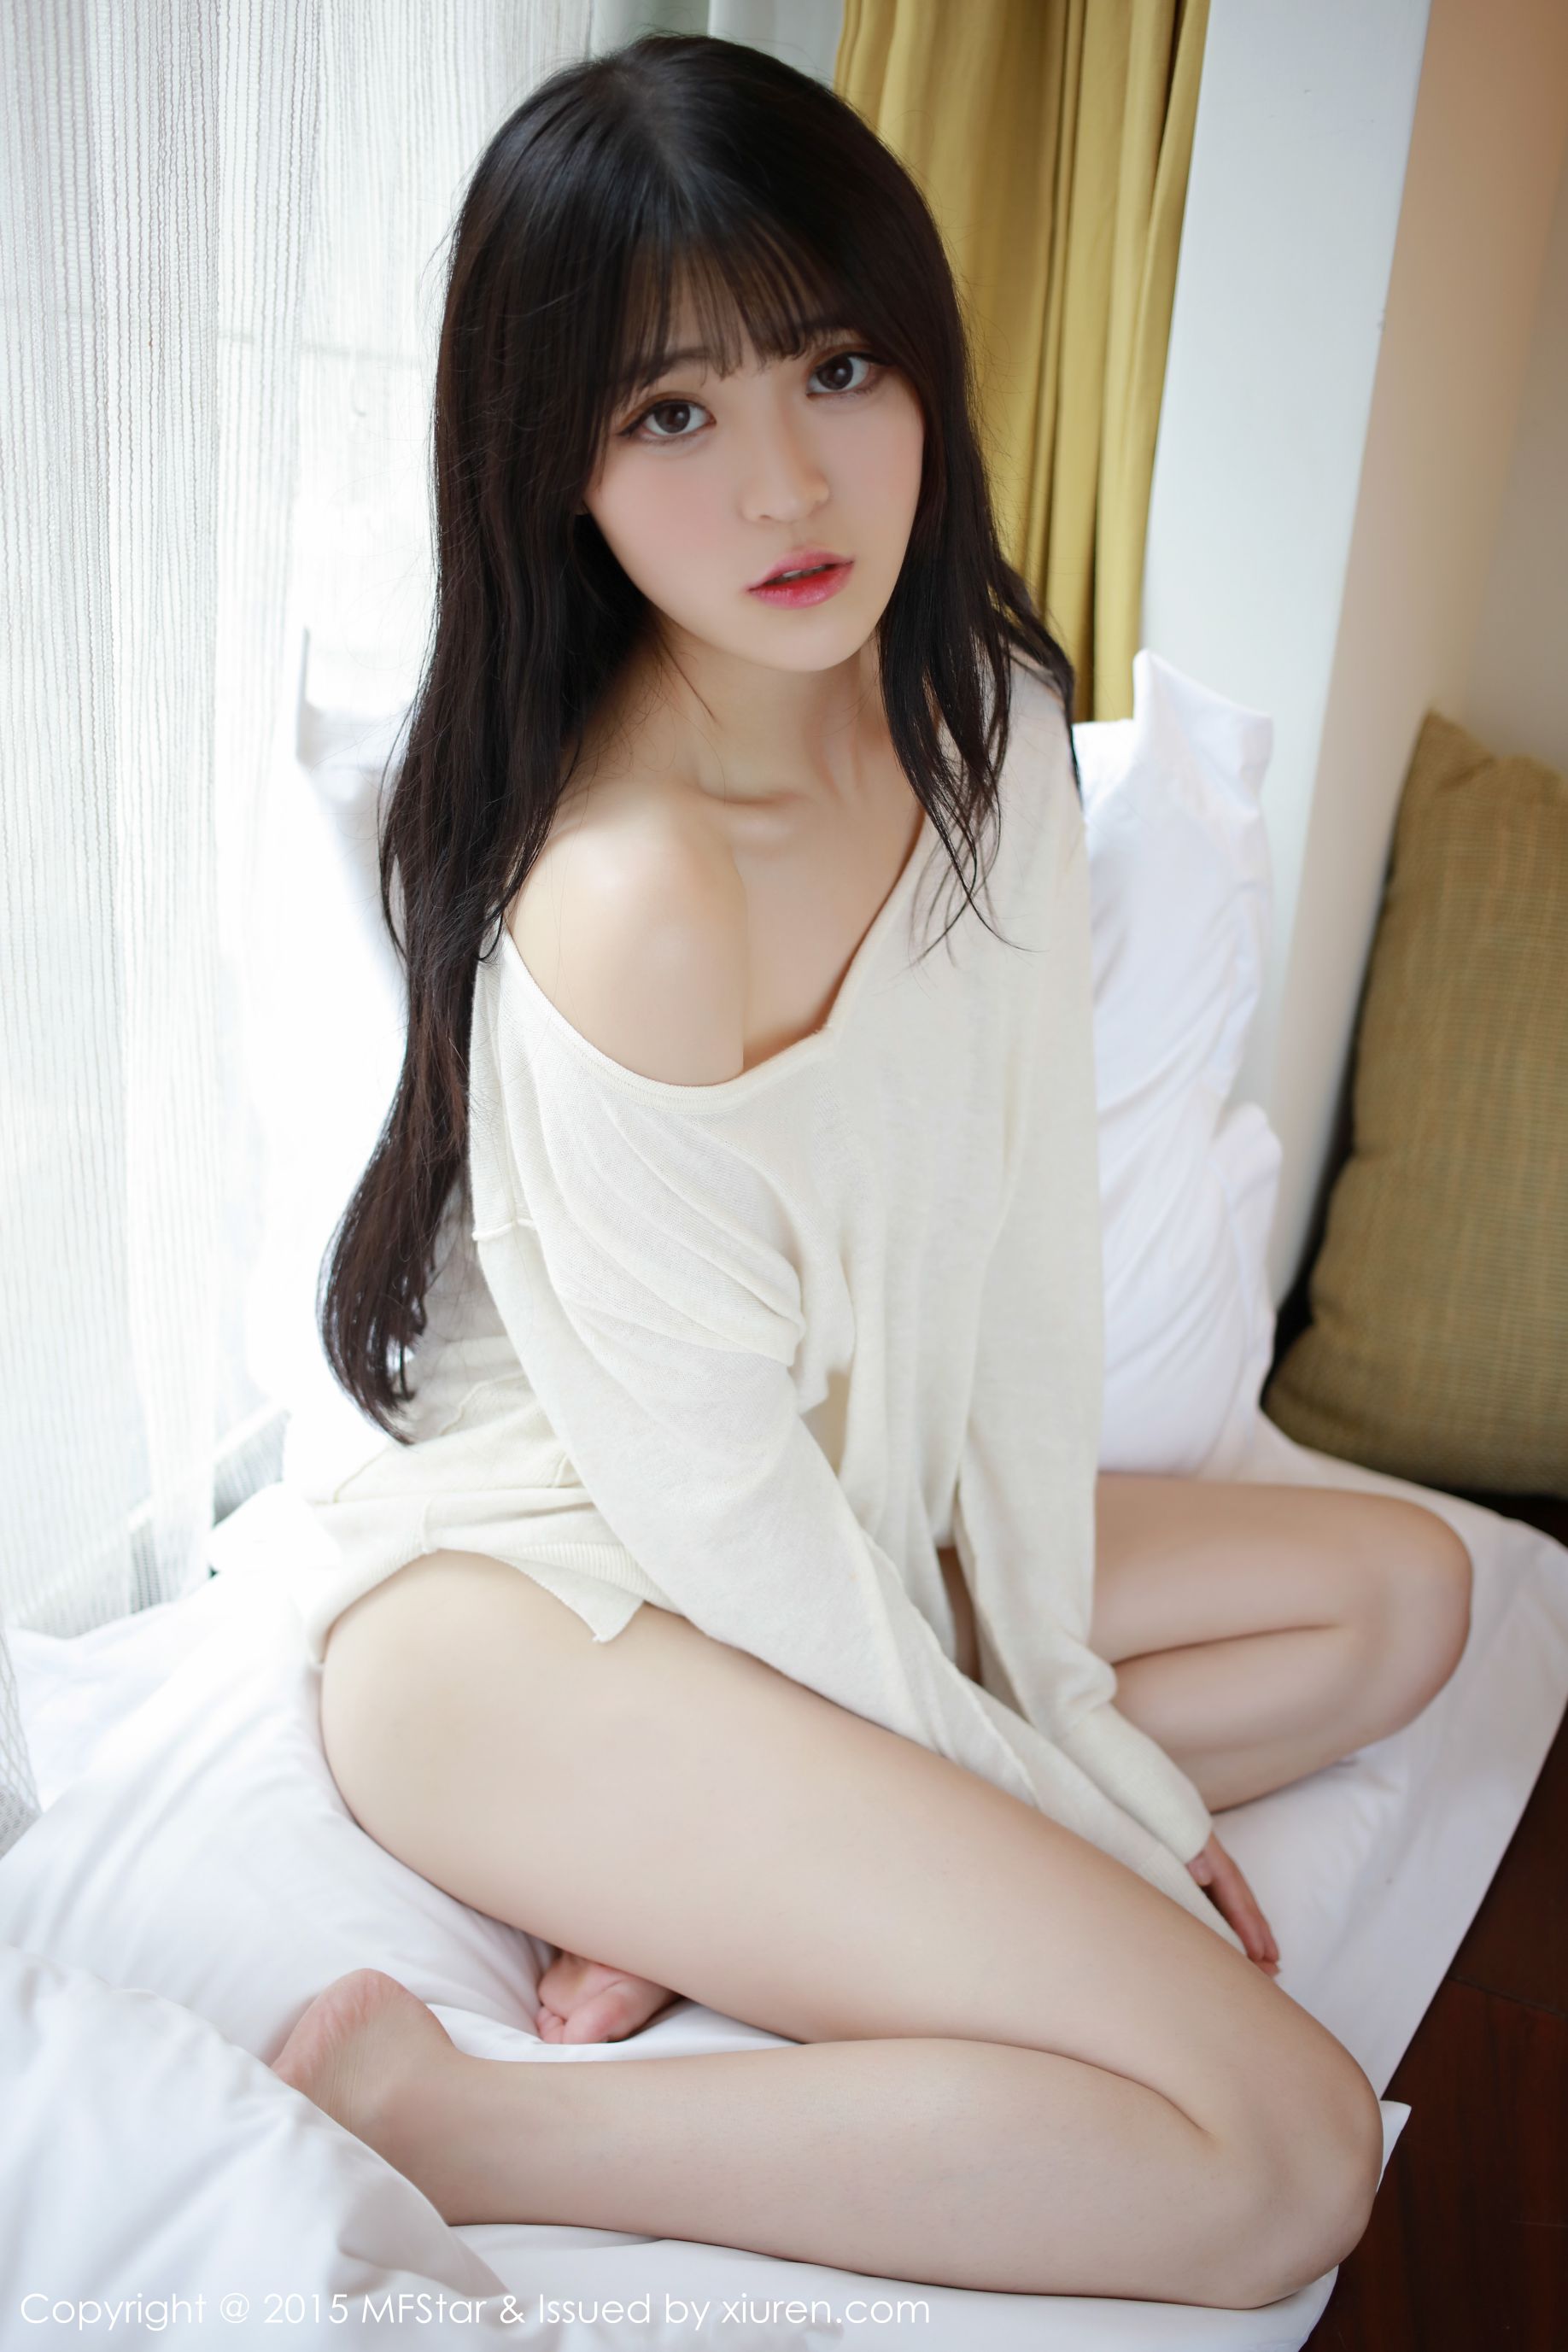 Yi Xiaoqi MoMo "Sexy Wet Travel Shooting" Model Academy MFStar Vo...